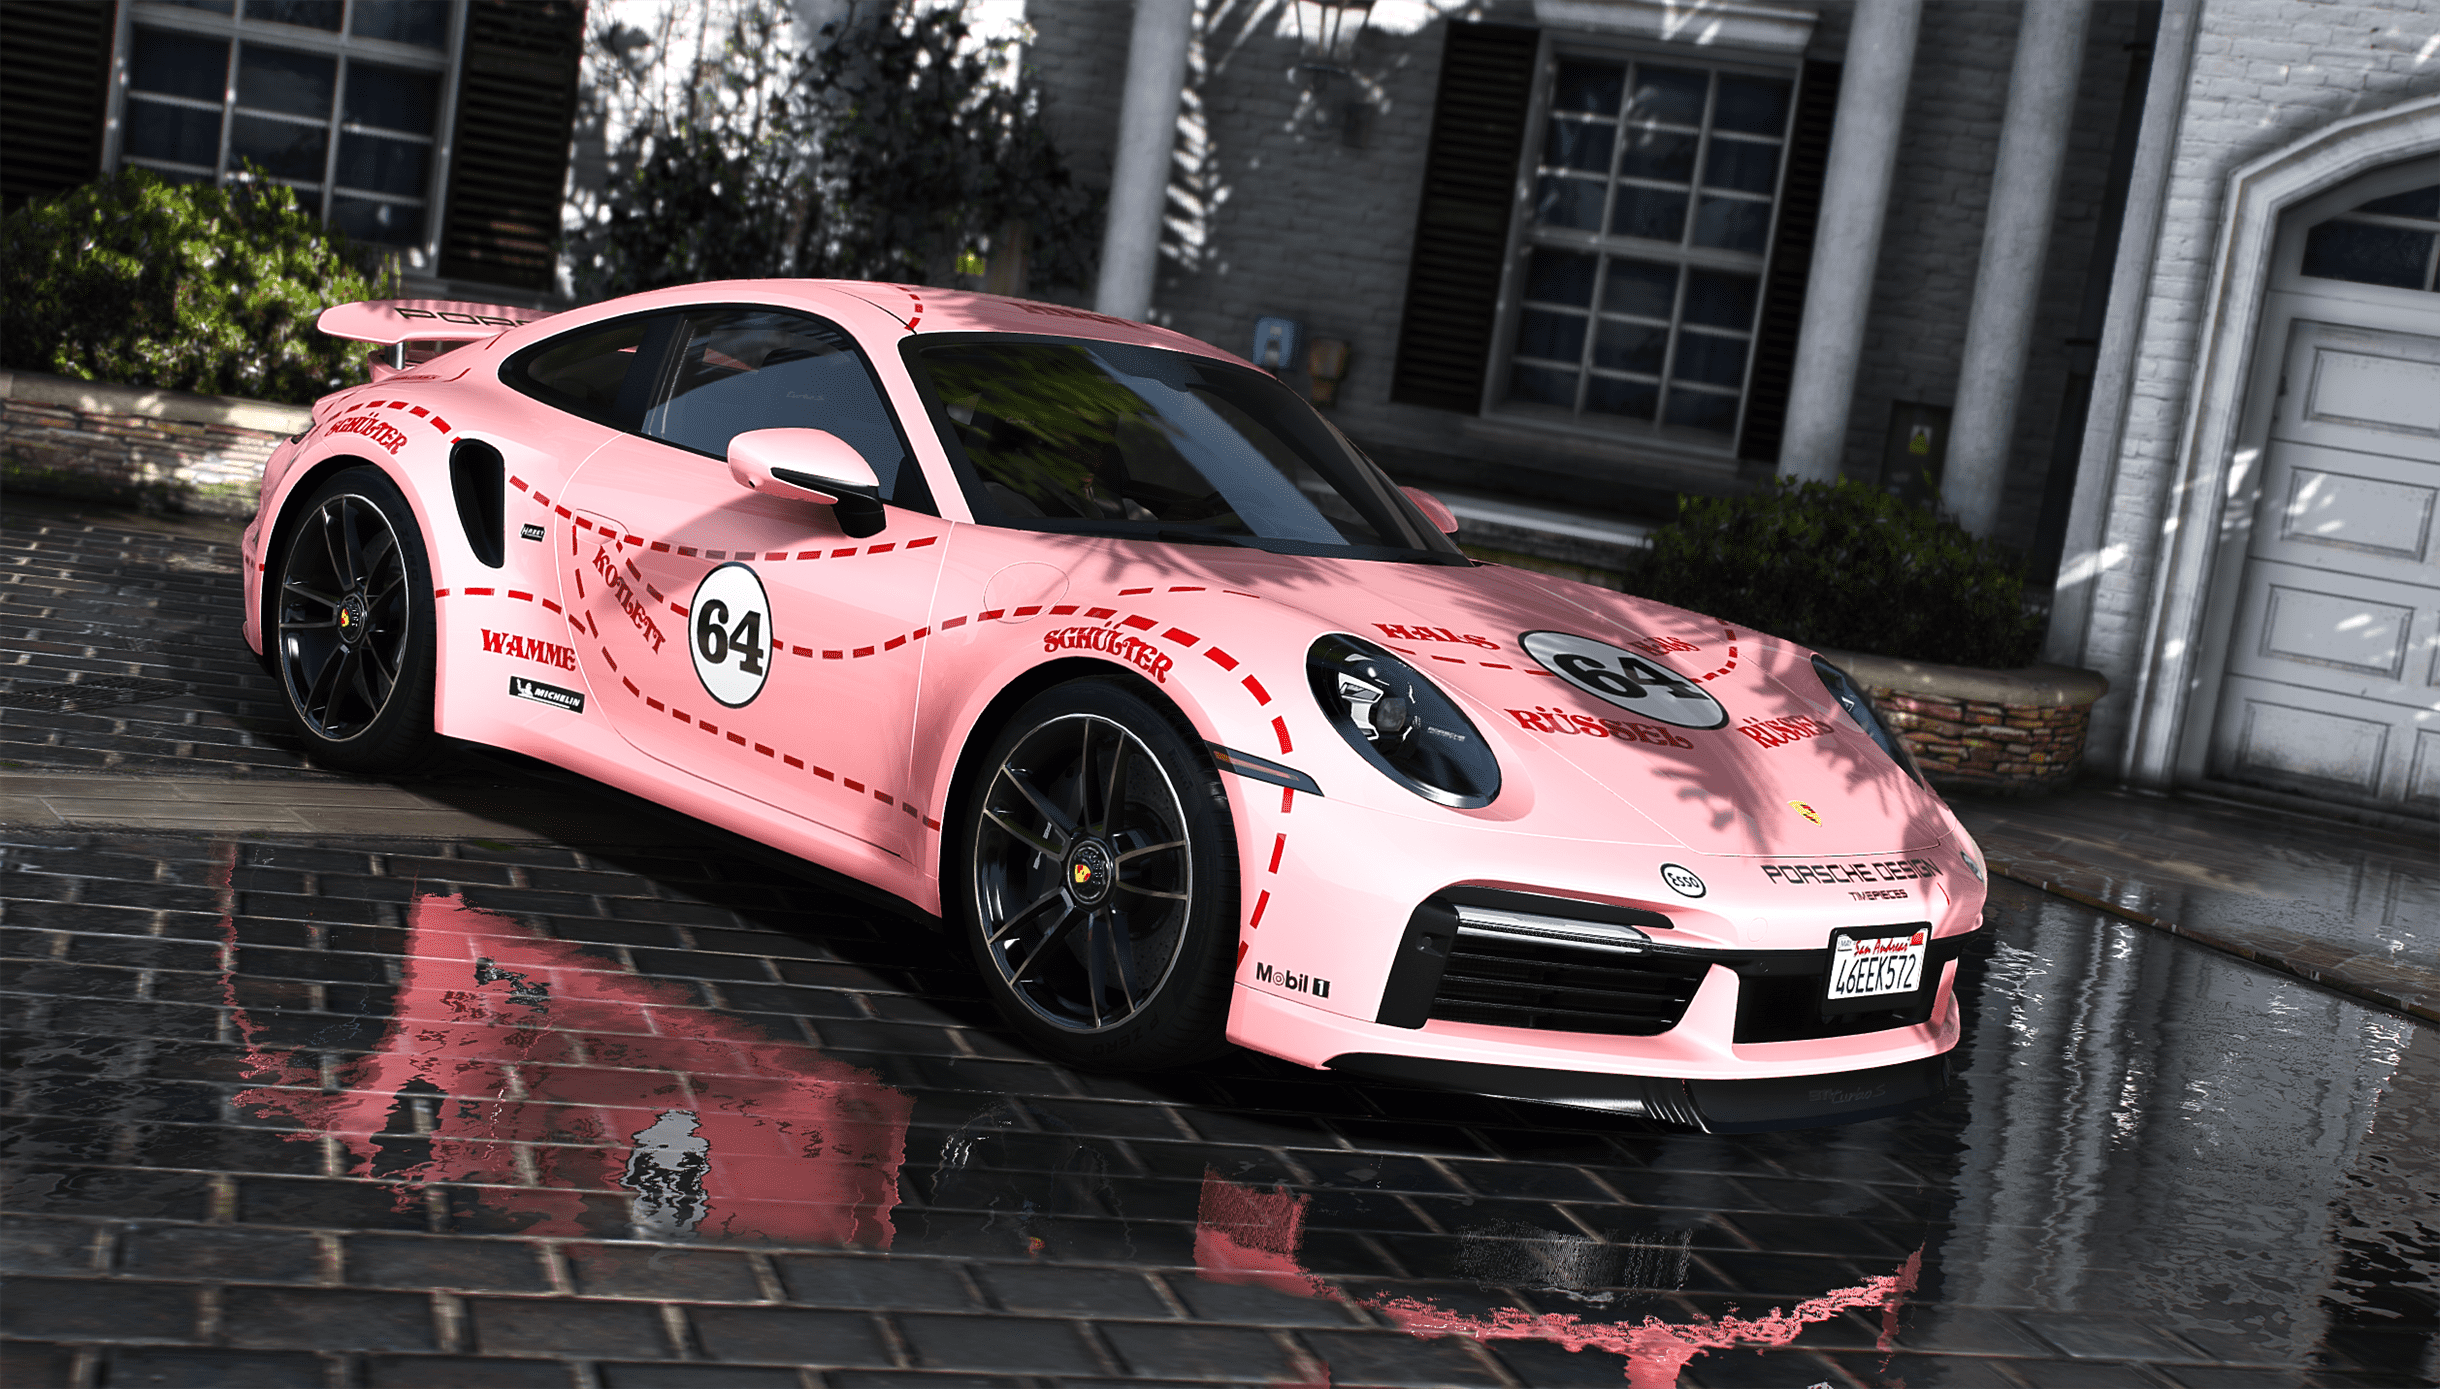 2021 Porsche 911 Turbo S (992)] Pink Pig Livery [4K] 